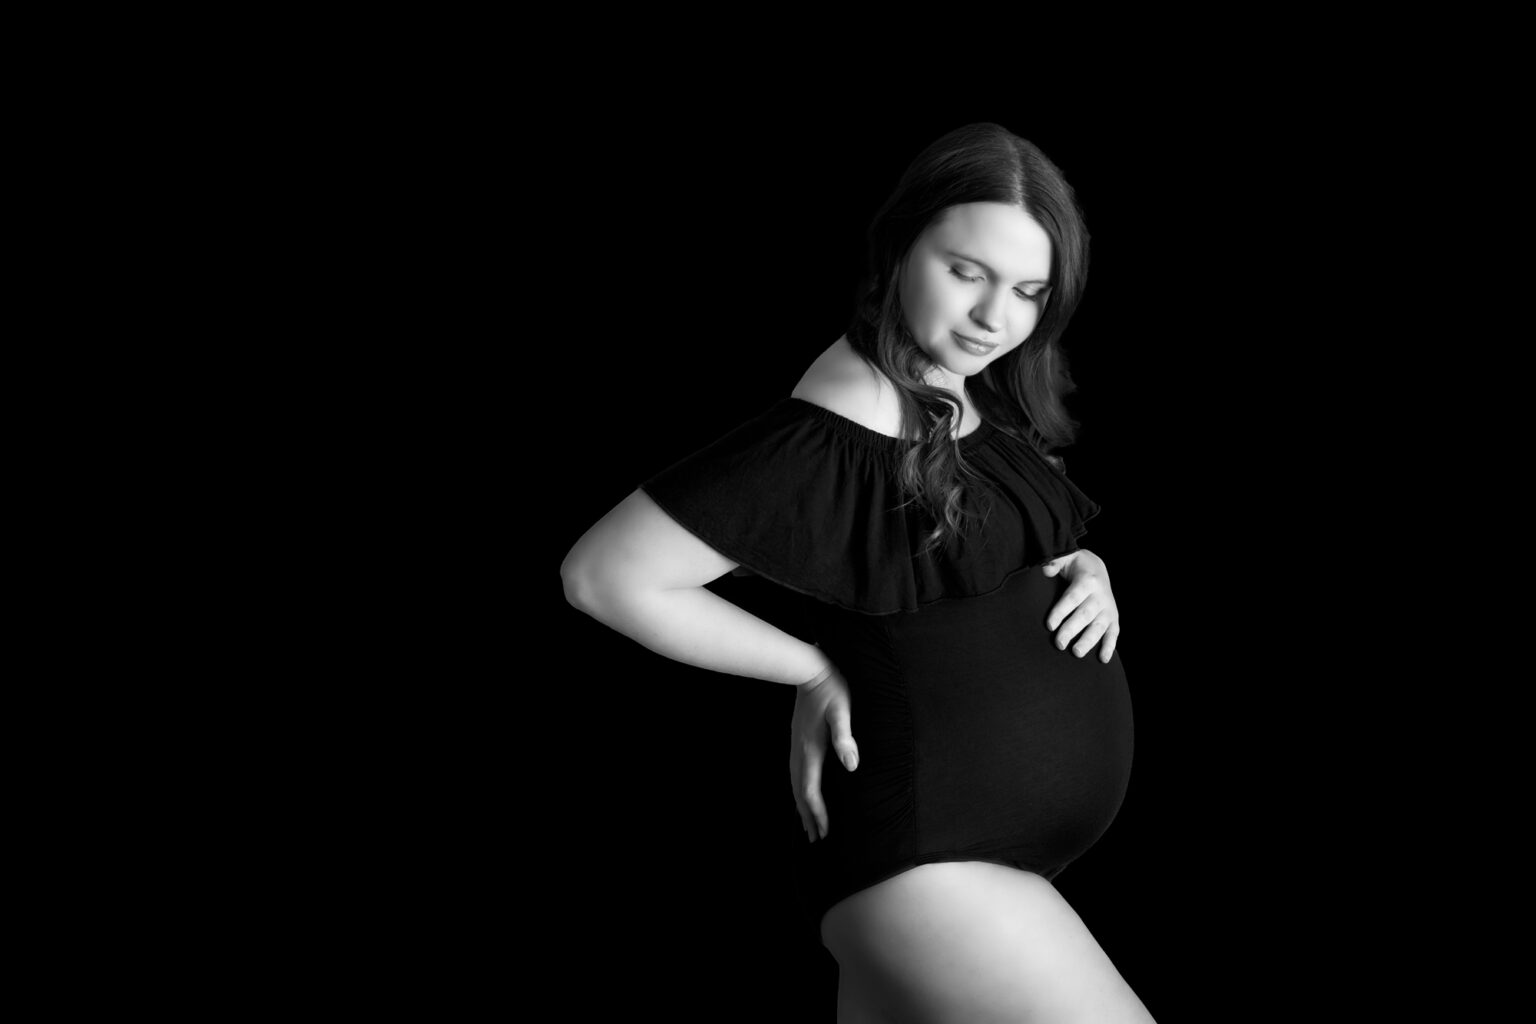 Elegant mum to be posing in black and white image wearing a black maternity bodysuit